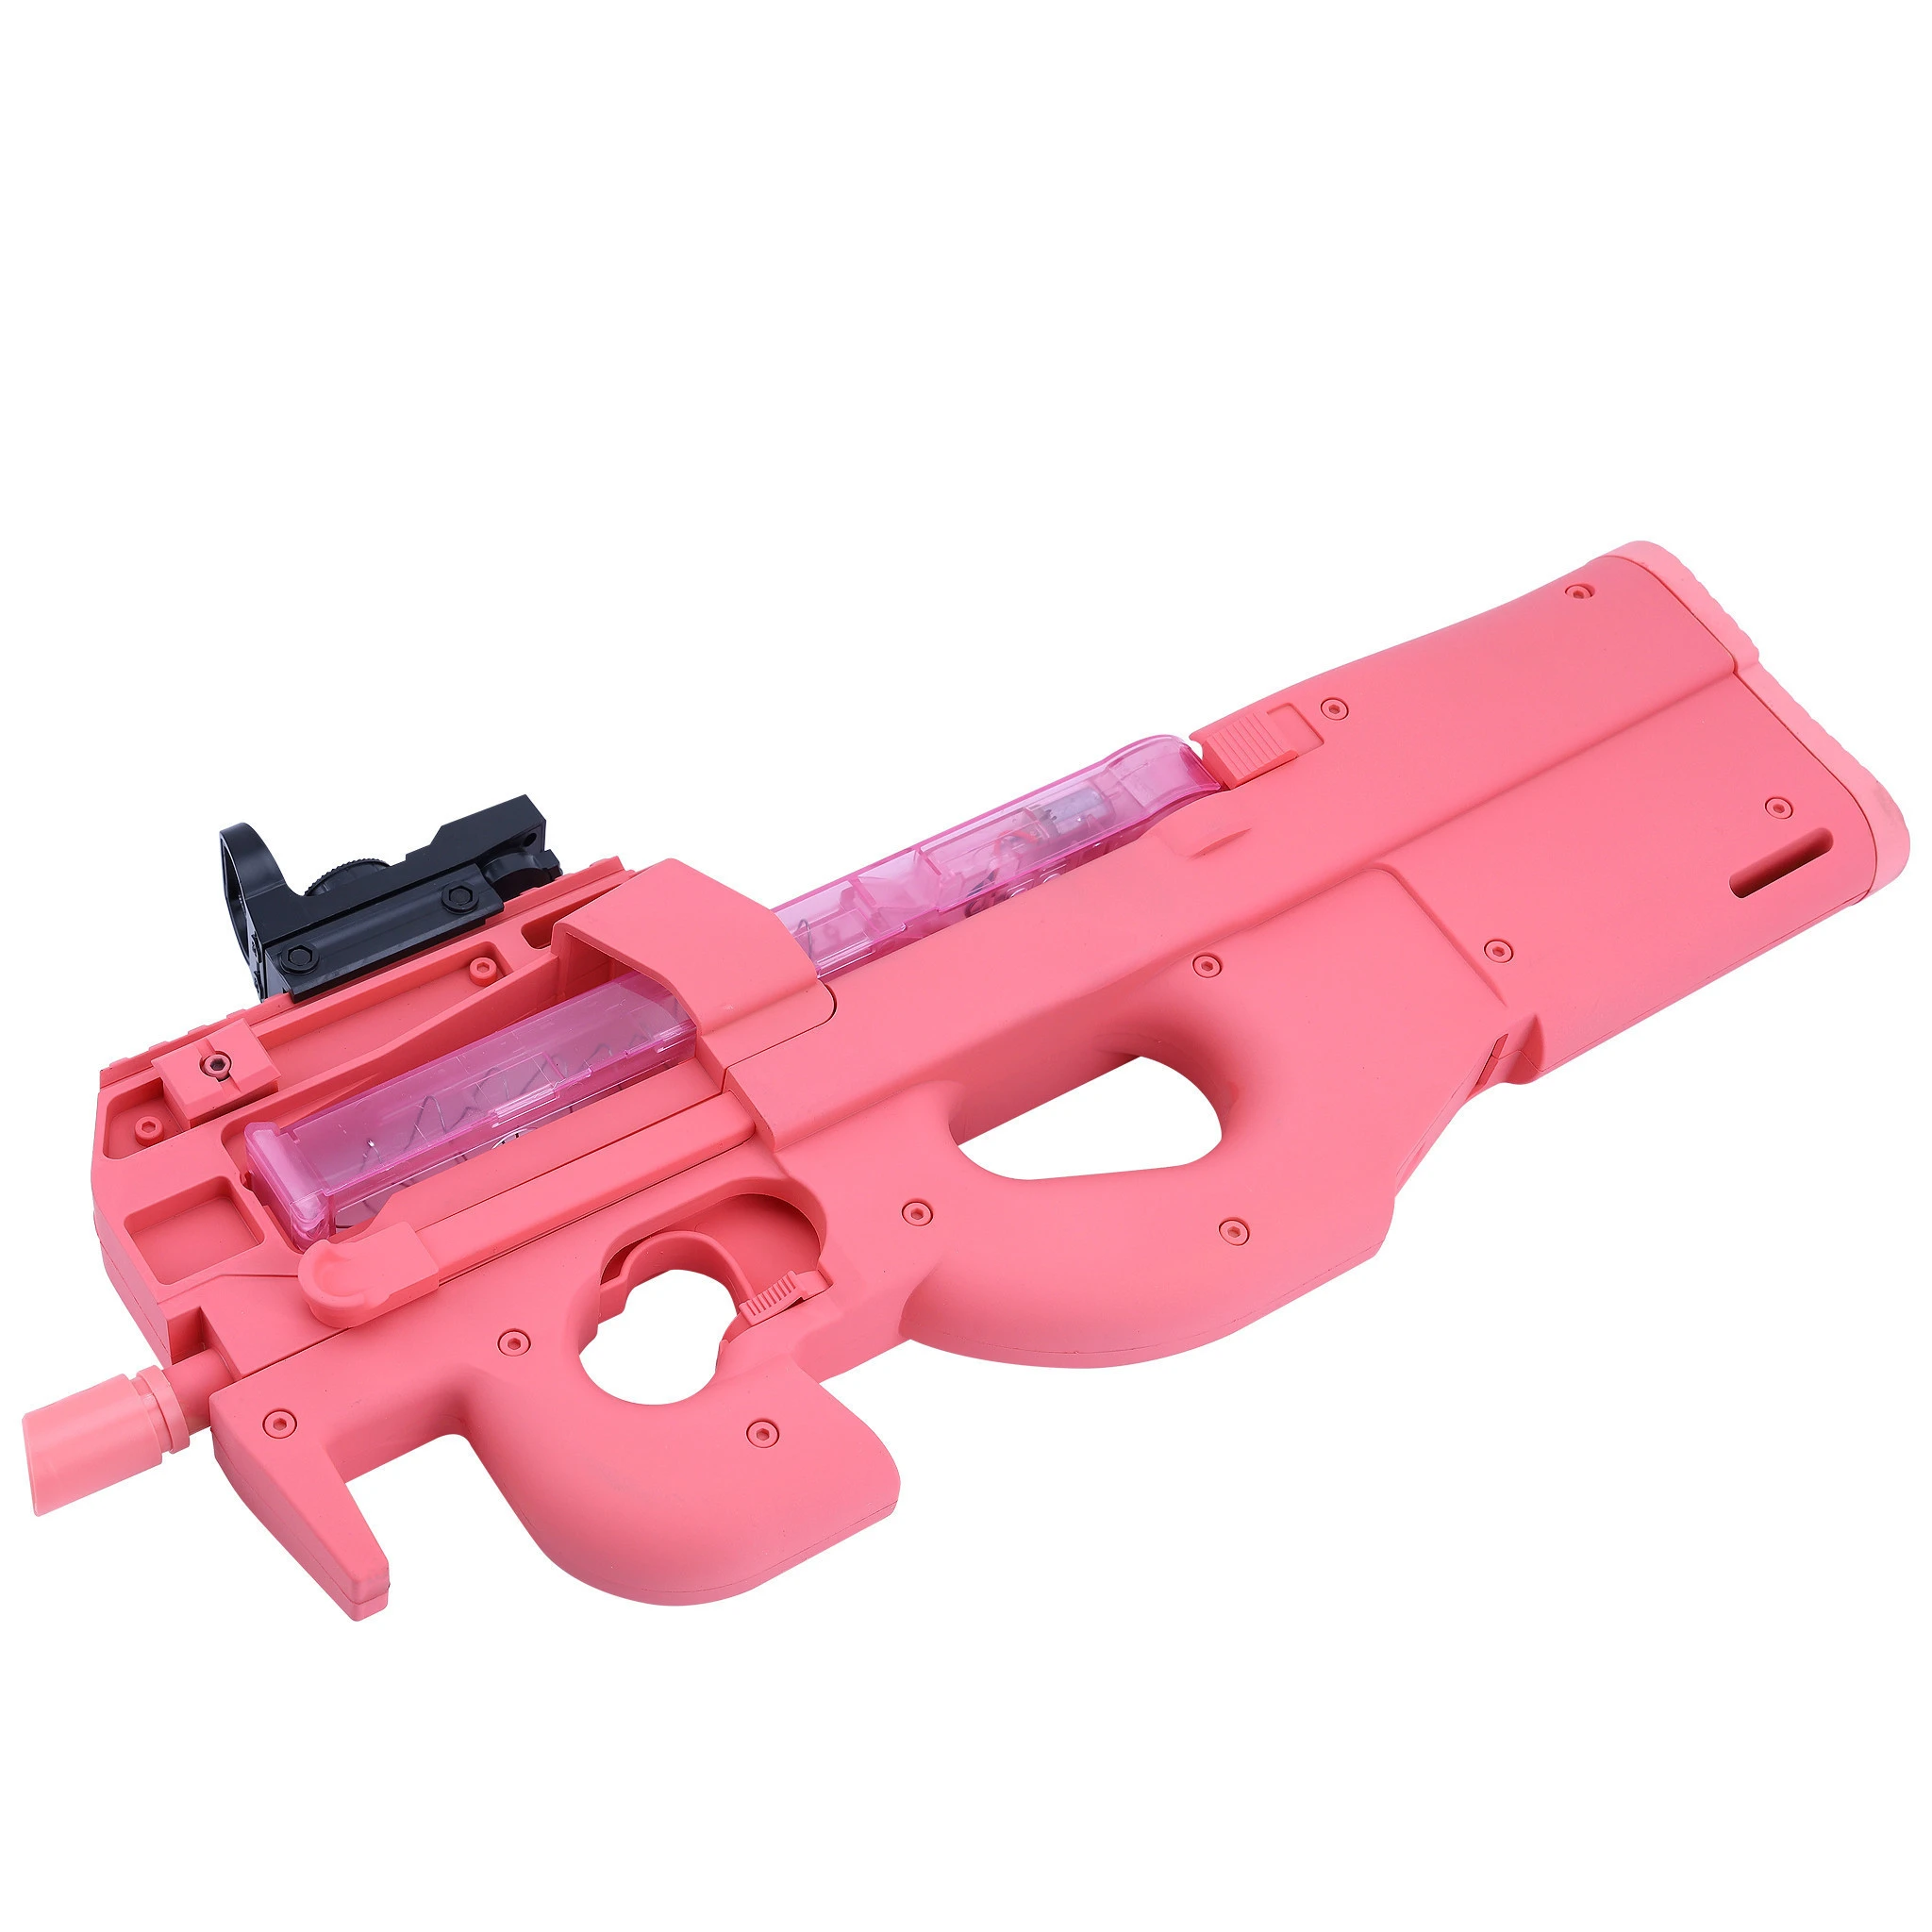 Australia like teenager gel blaster toy P90 V3 pink gun toy